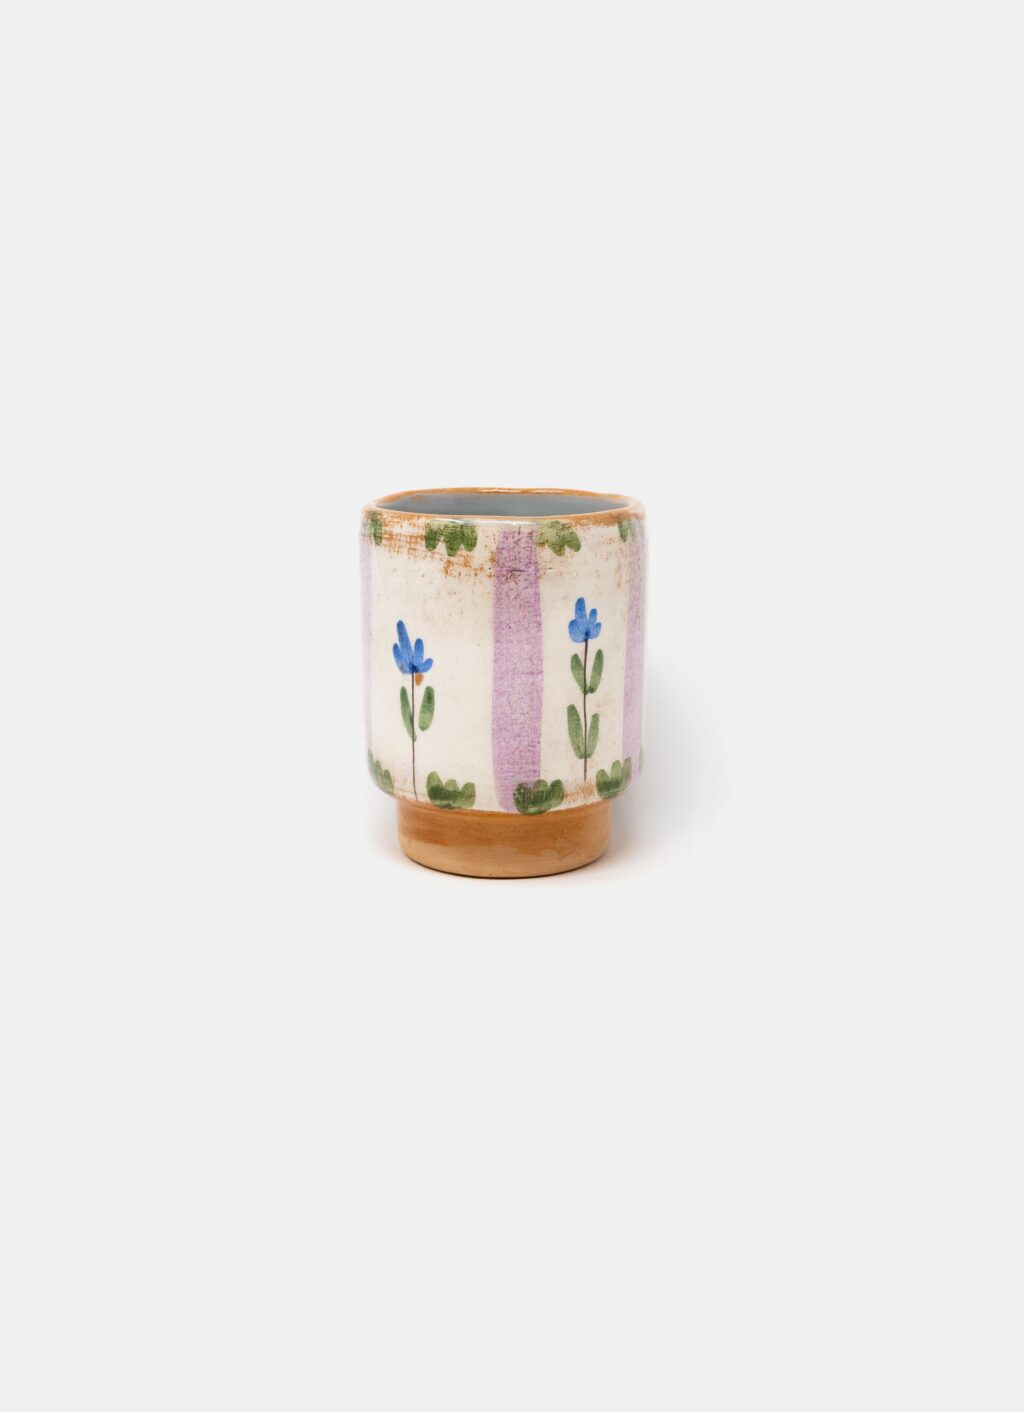 Ori Ceramic - Hand built - Hand painted - Stoneware - Mug - Motive 7